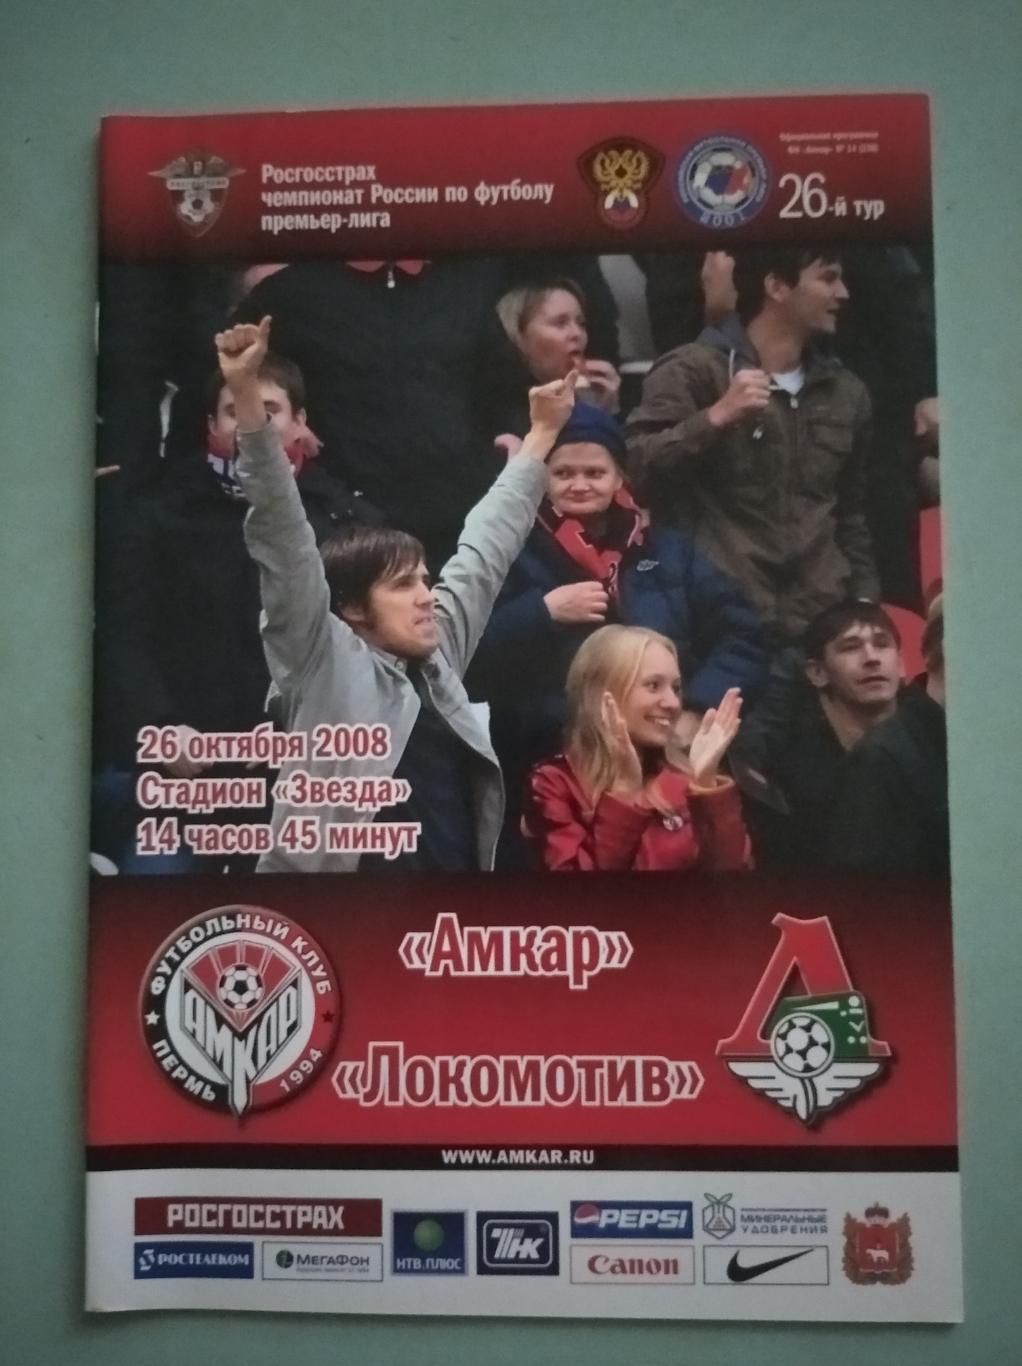 Амкар Пермь - Локомотив Москва. 26.10.2008